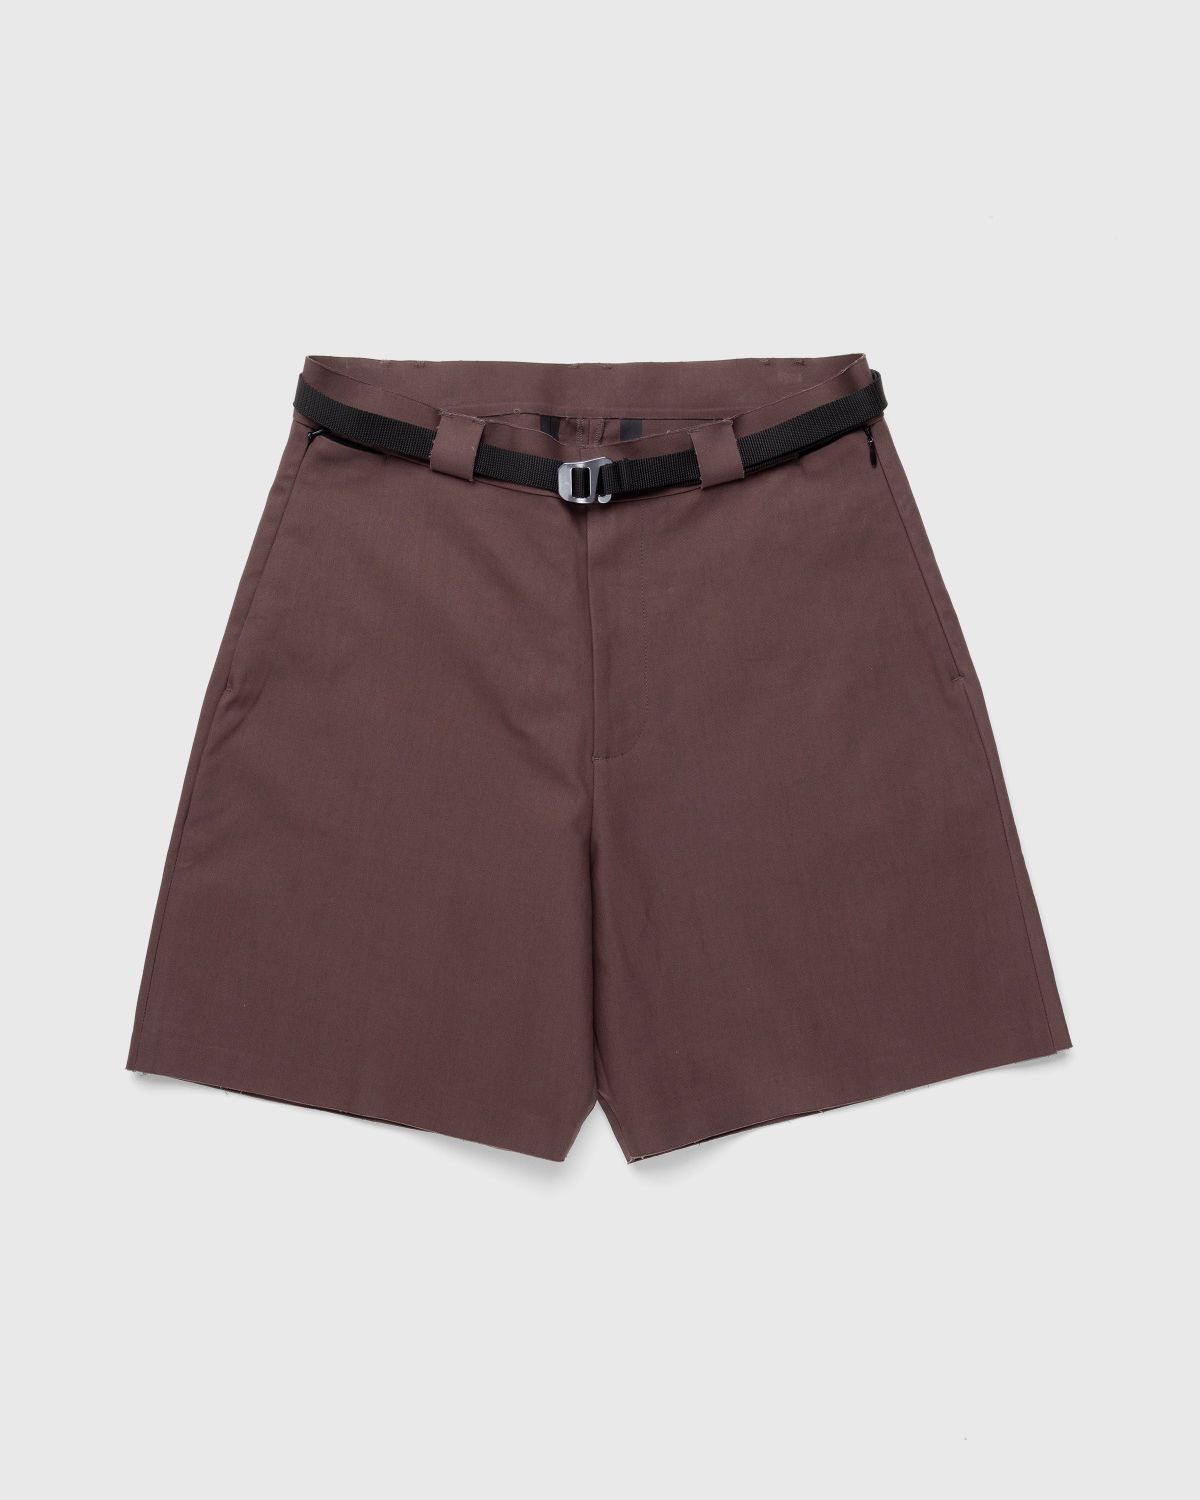 ROA – Climbing Shorts Chicory Coffee Brown - Shorts - Brown - Image 1